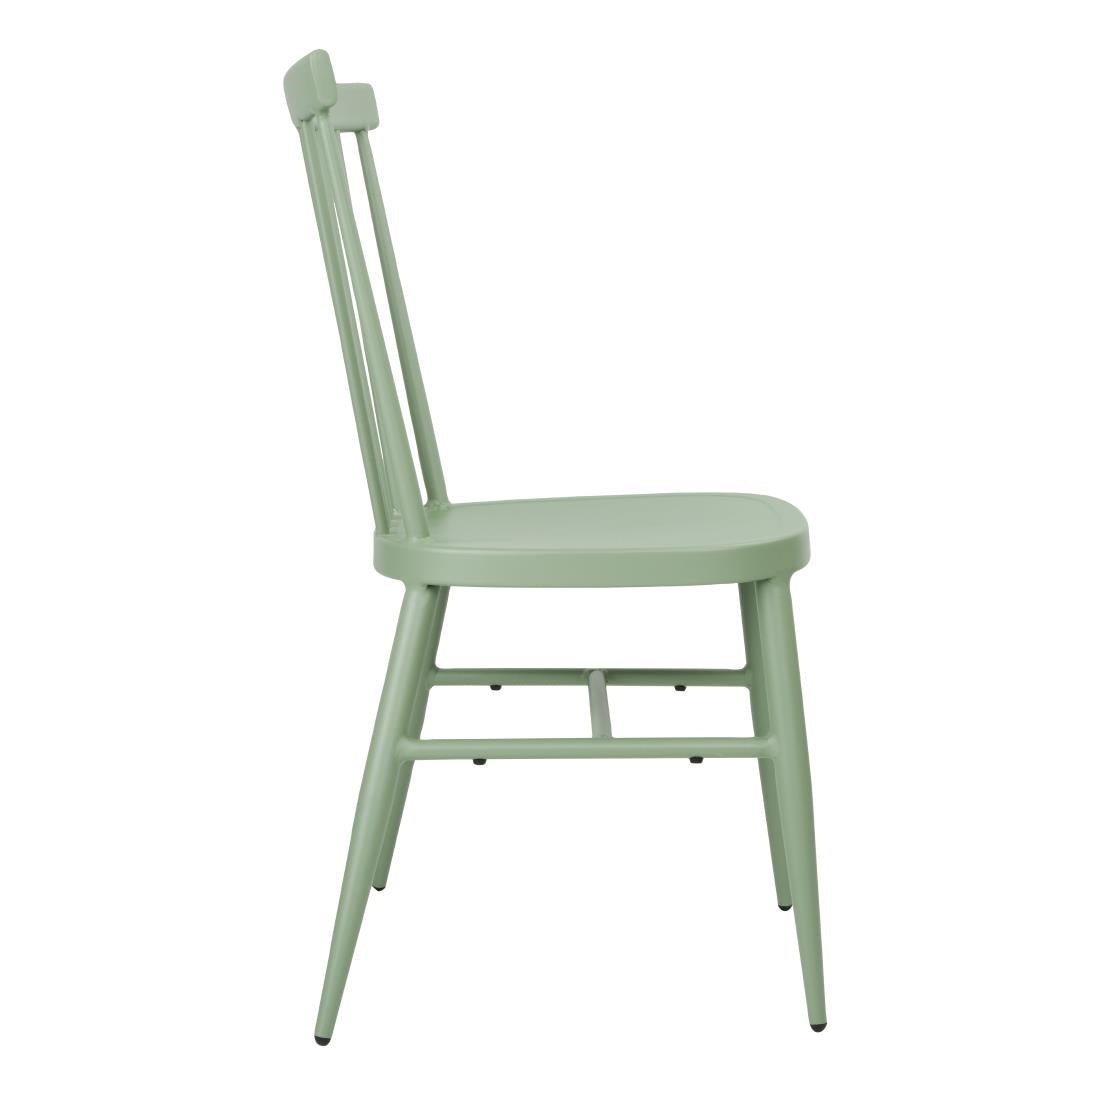 DX687 Bolero Windsor Aluminium Green Chairs (Pack of 4)